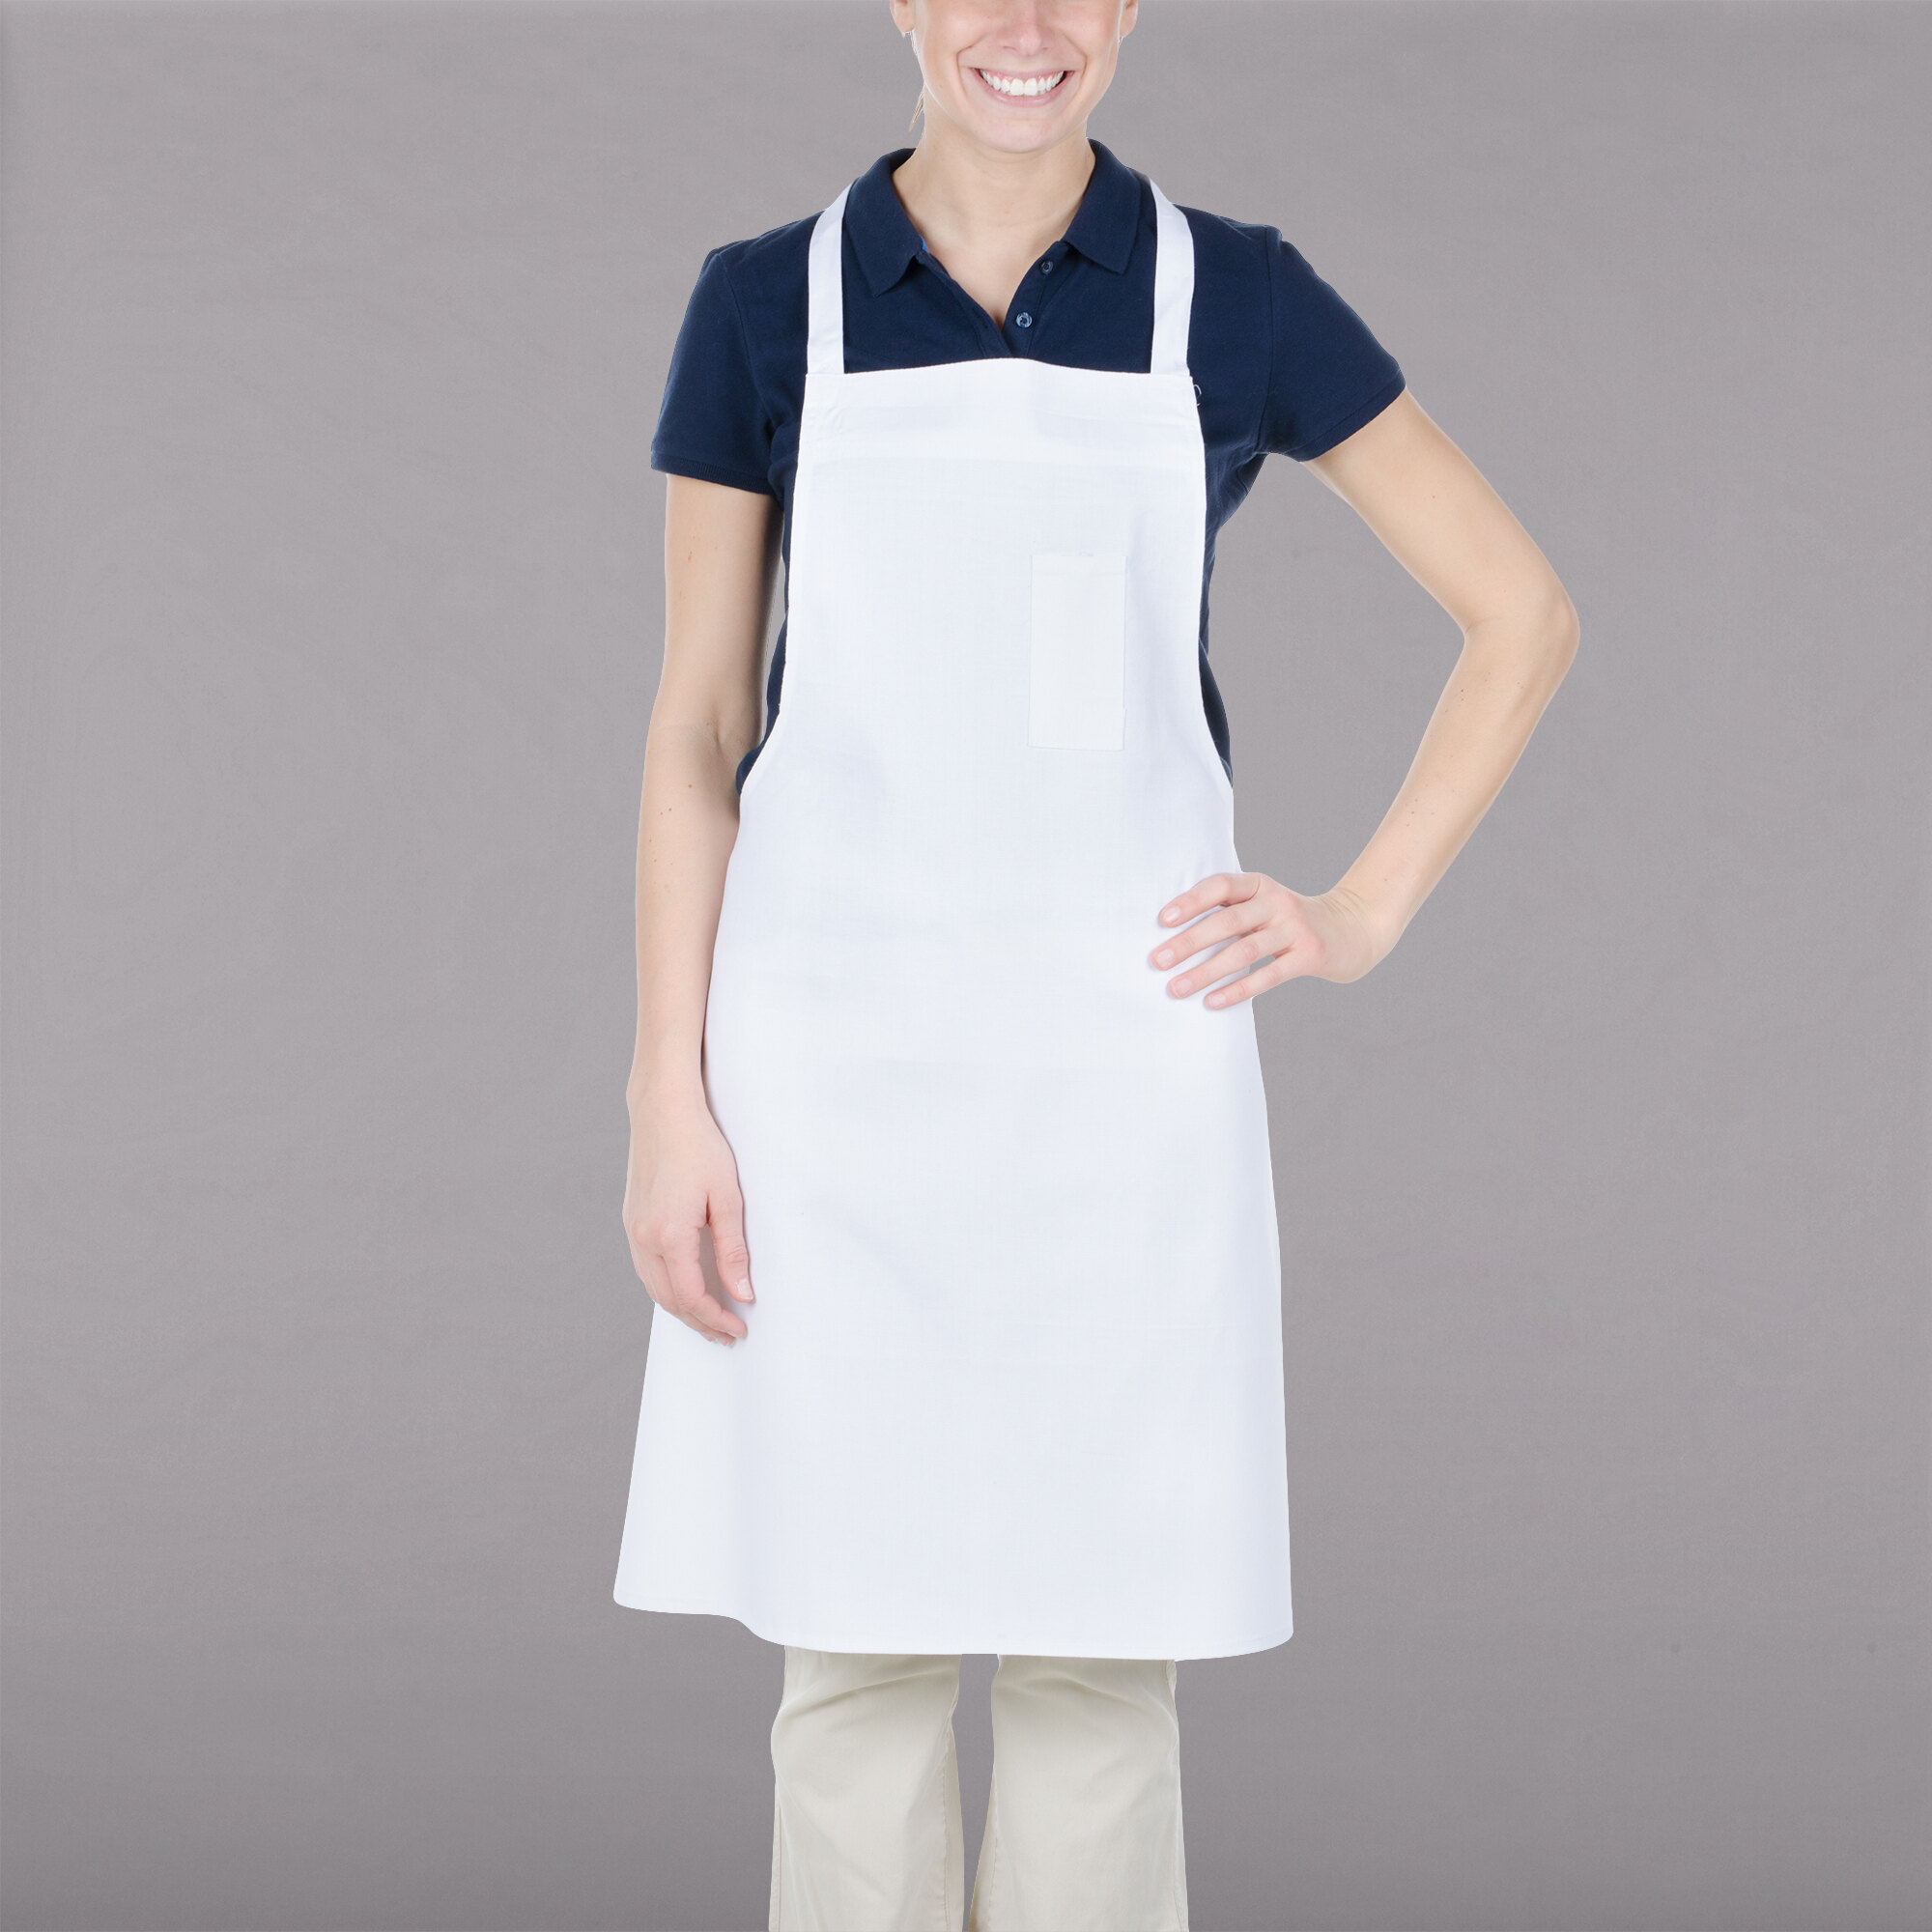 Chef Revival White Poly Cotton Economy Customizable Bib Apron With 1 Pocket 34l X 34w 